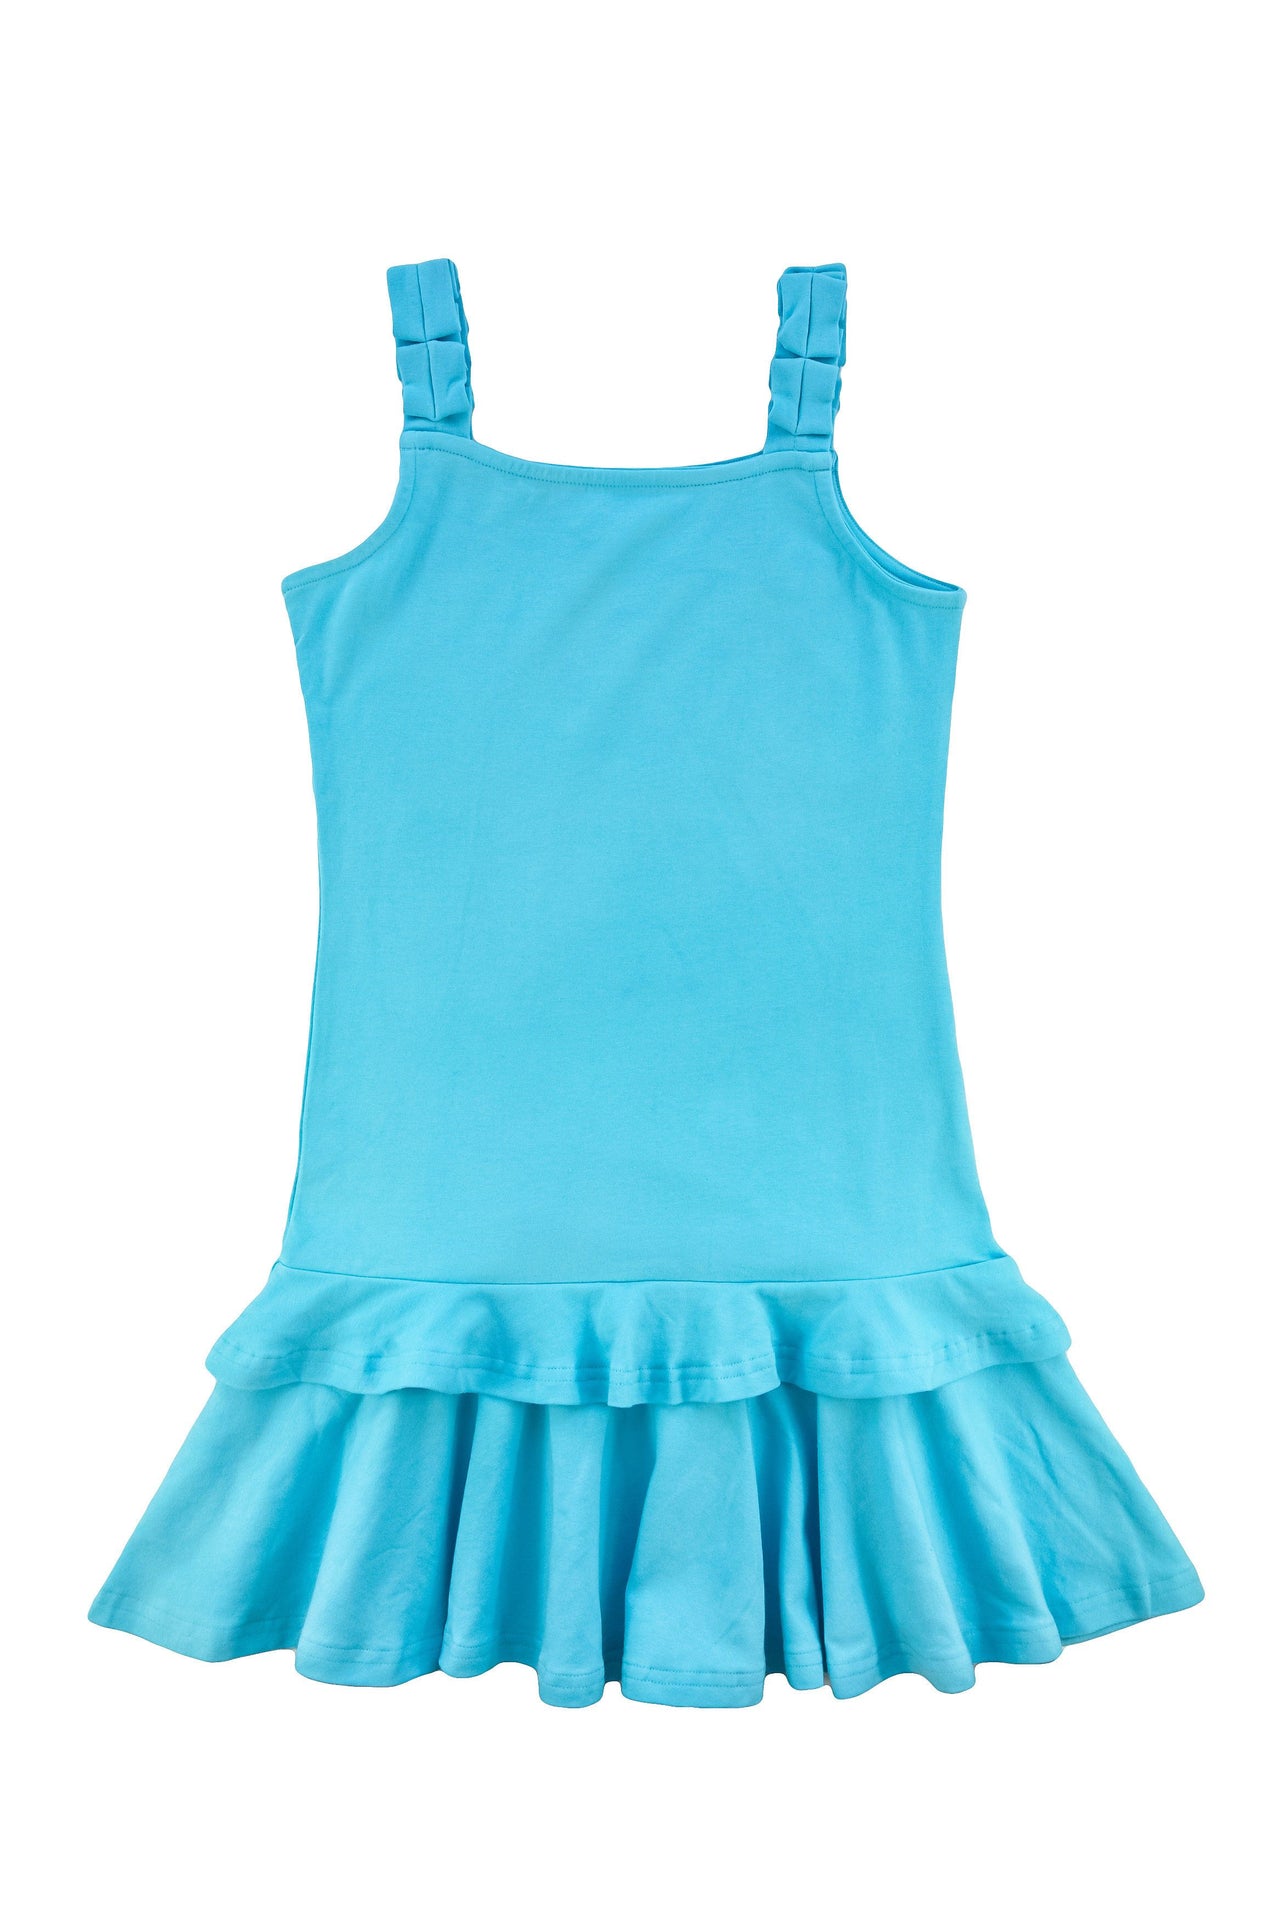 Florence Eiseman Knit Dress W/Pleated Straps Aqua C5265 5012